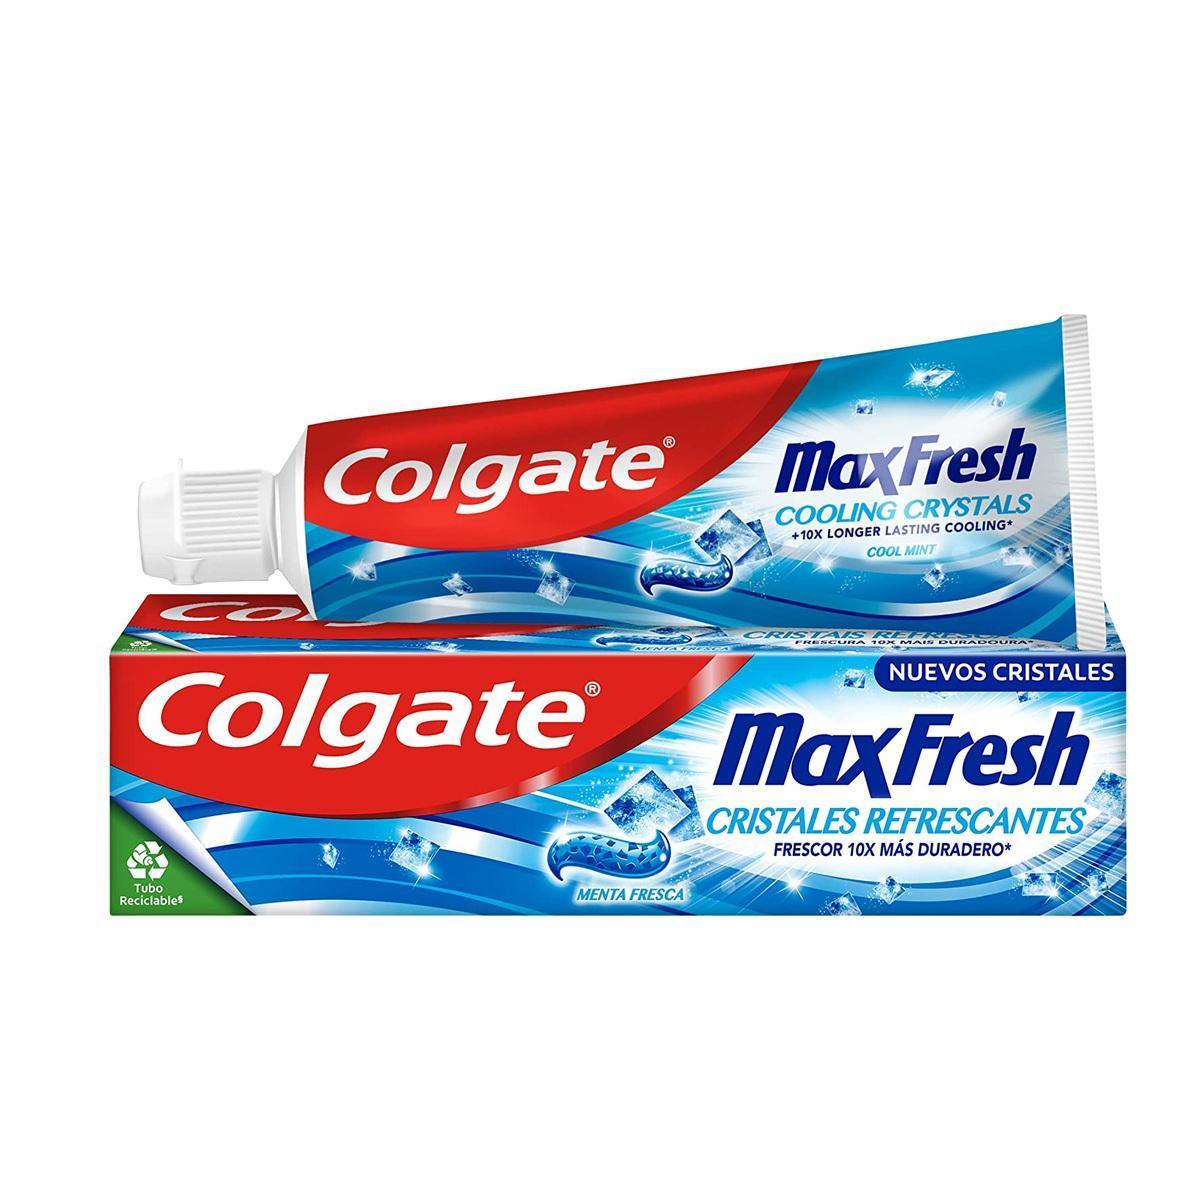 Colgate - Pasta de dientes Colgate Max Fresh con cristales refrescantes, frescor duradero, menta fresca 75ml.